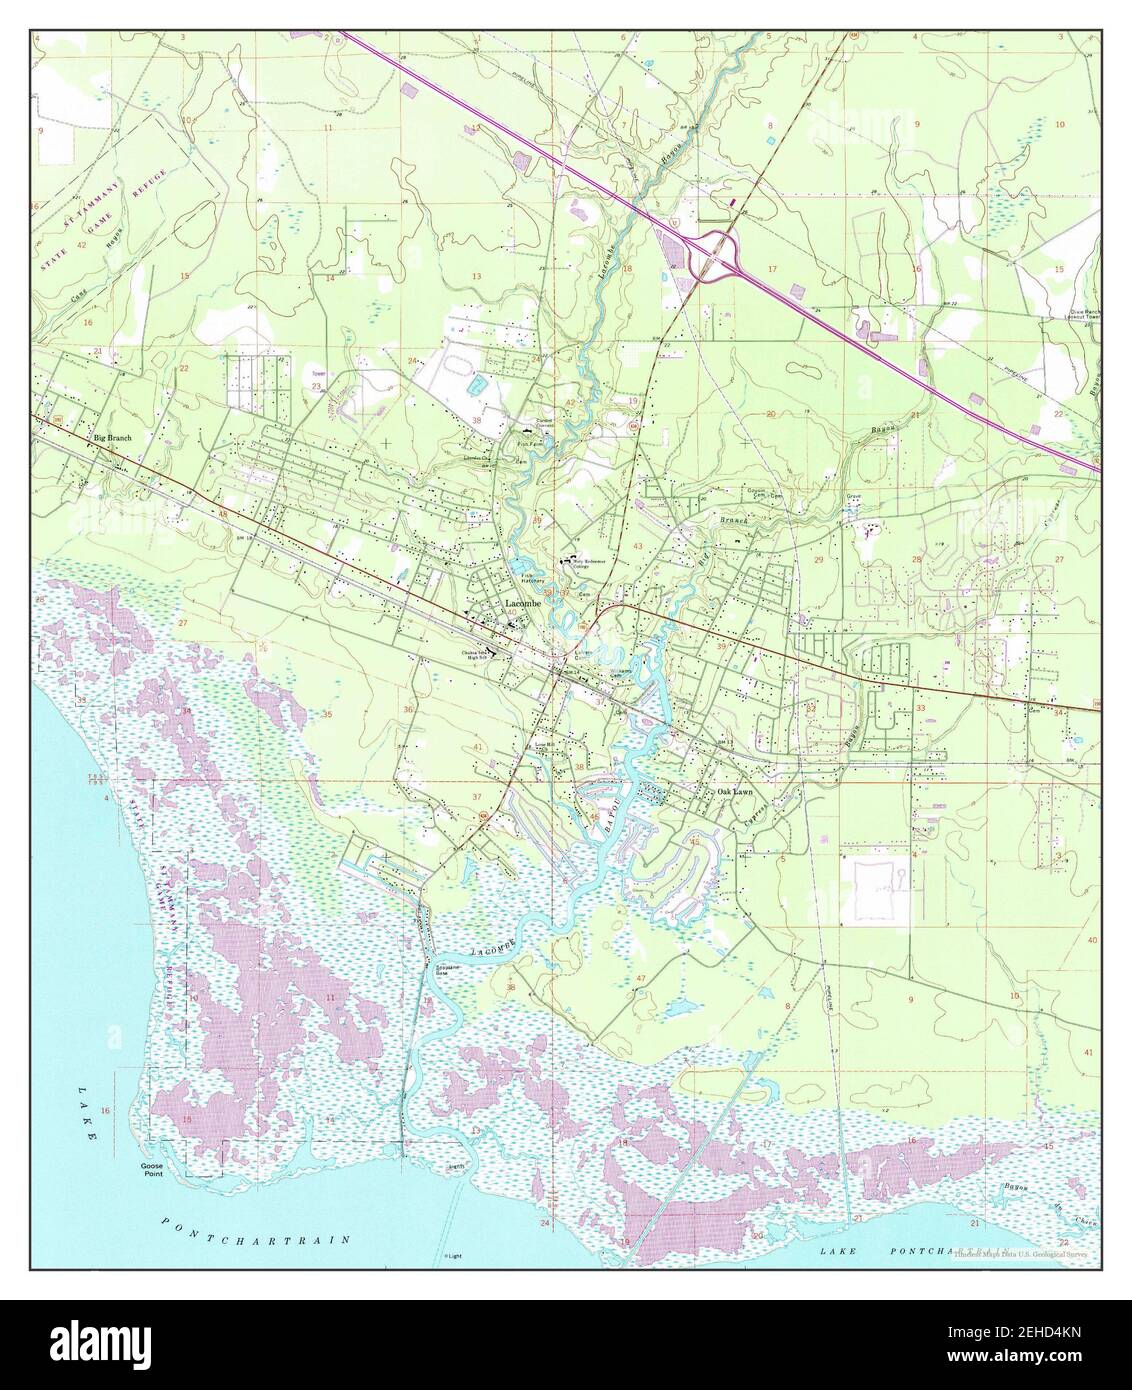 Lacombe, Louisiana, map 1971, 1:24000, United States of America by ...